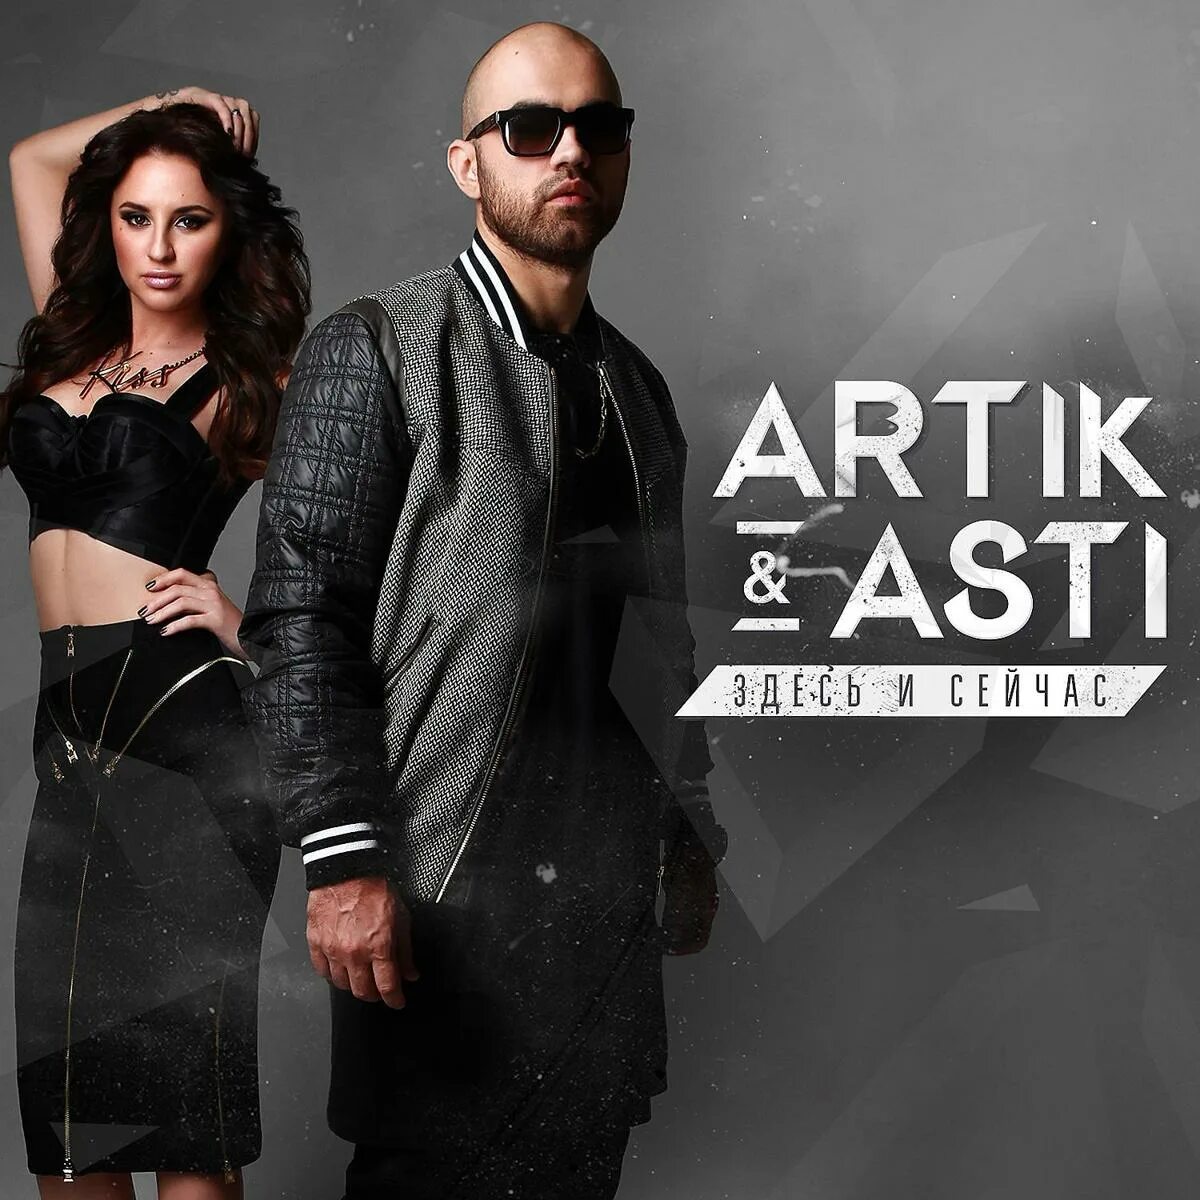 Новинки песен месяца. Артик и Асти. Artik Asti здесь и сейчас 2015. Artik Asti обложка. Артик и Асти 2014.